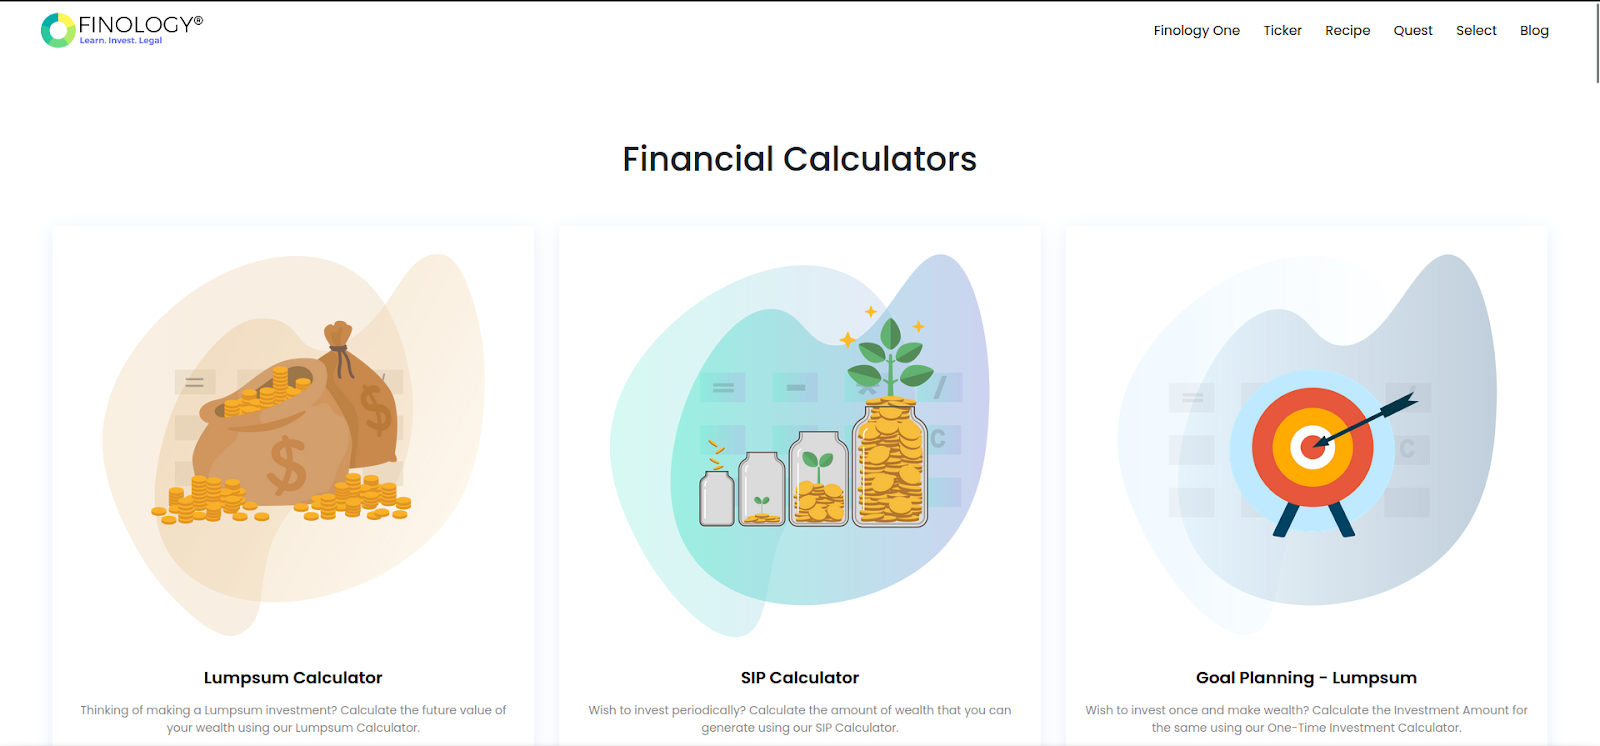 Financial Calculators by Finology